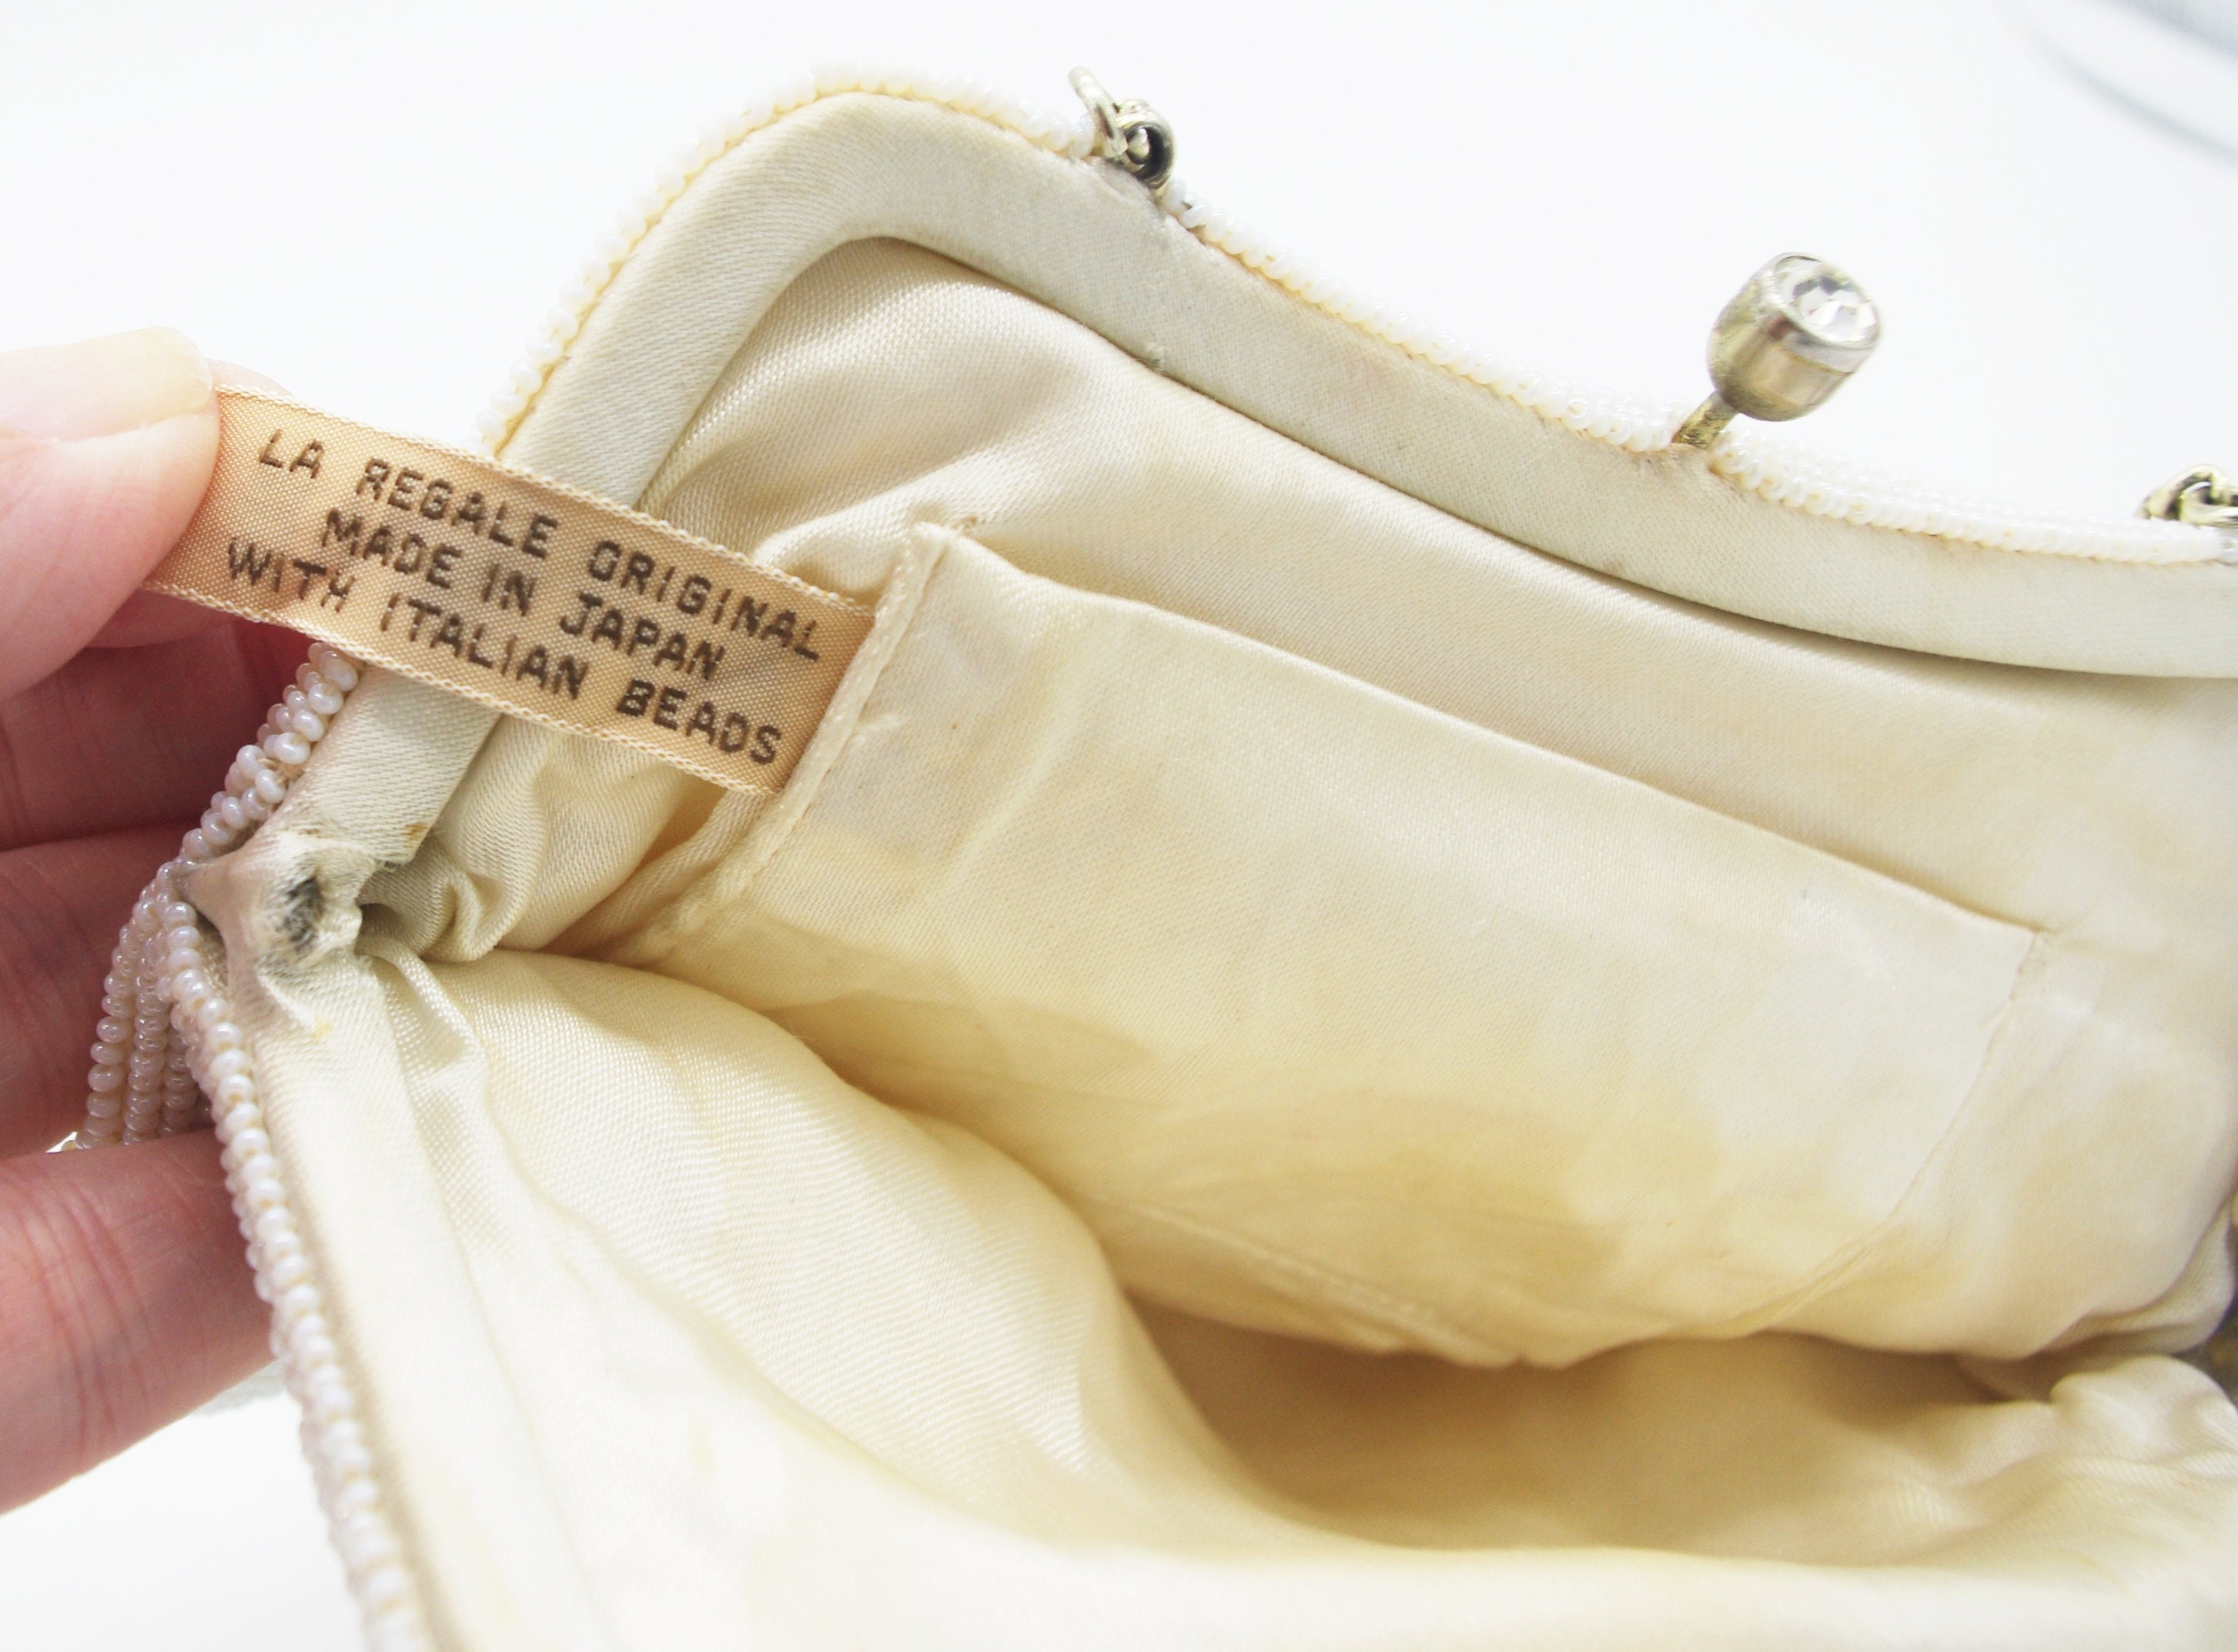 Vintage La Regale beaded bag made in Japan